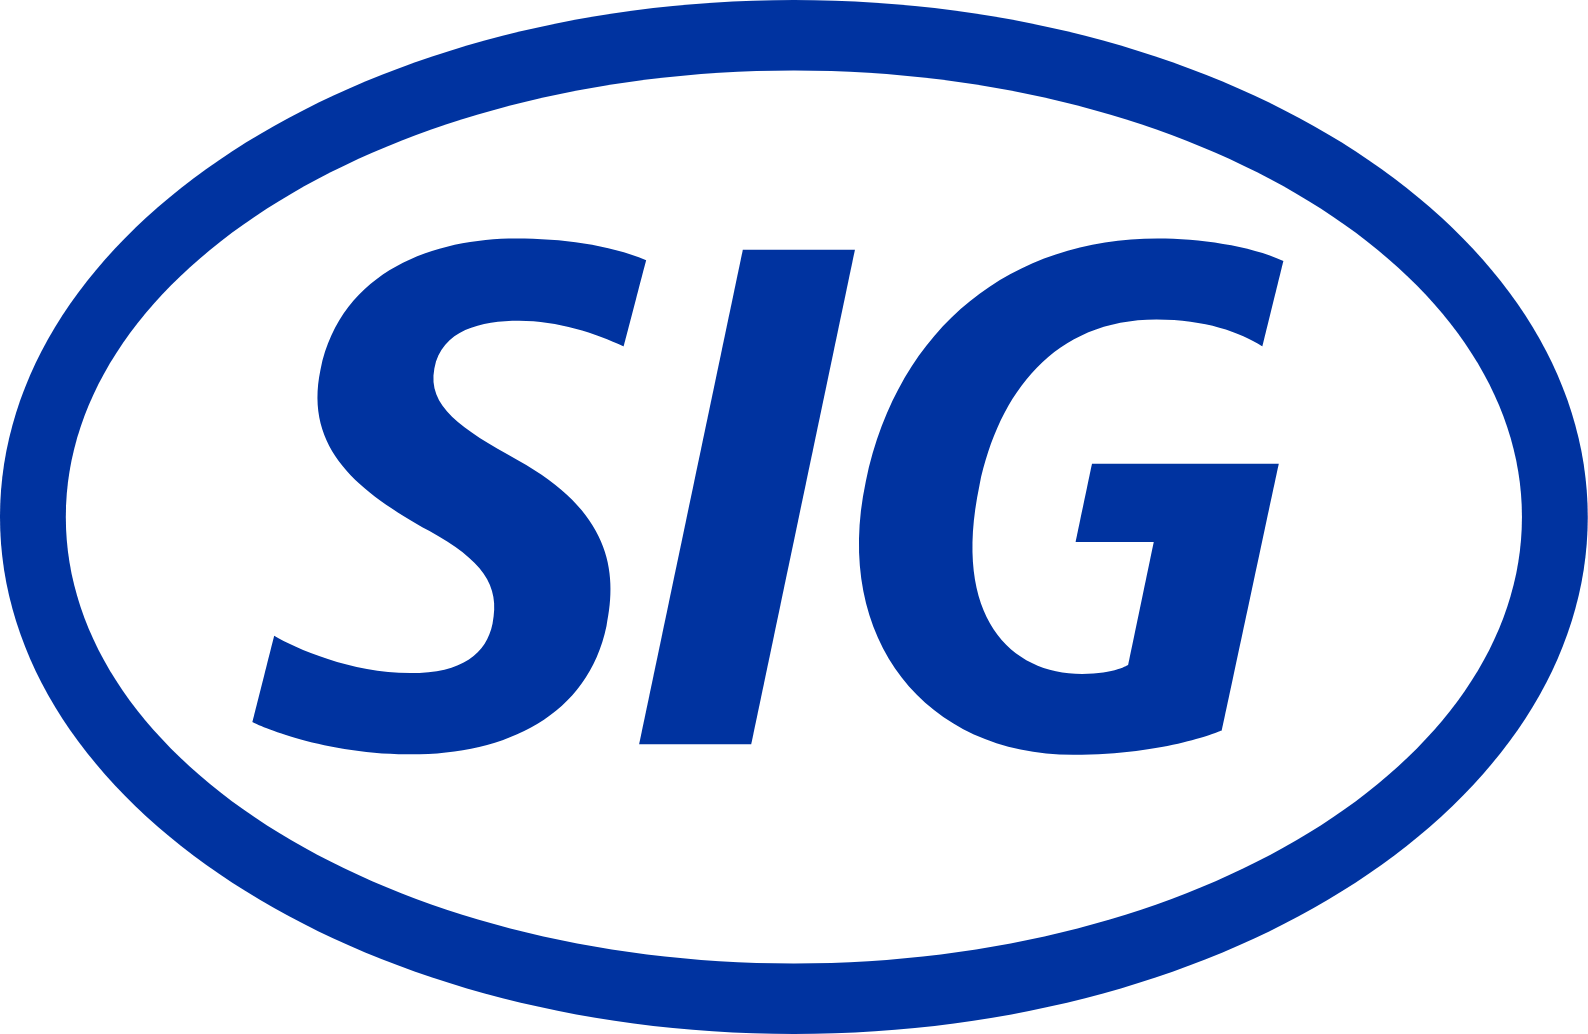 SIG Combibloc logo (PNG transparent)